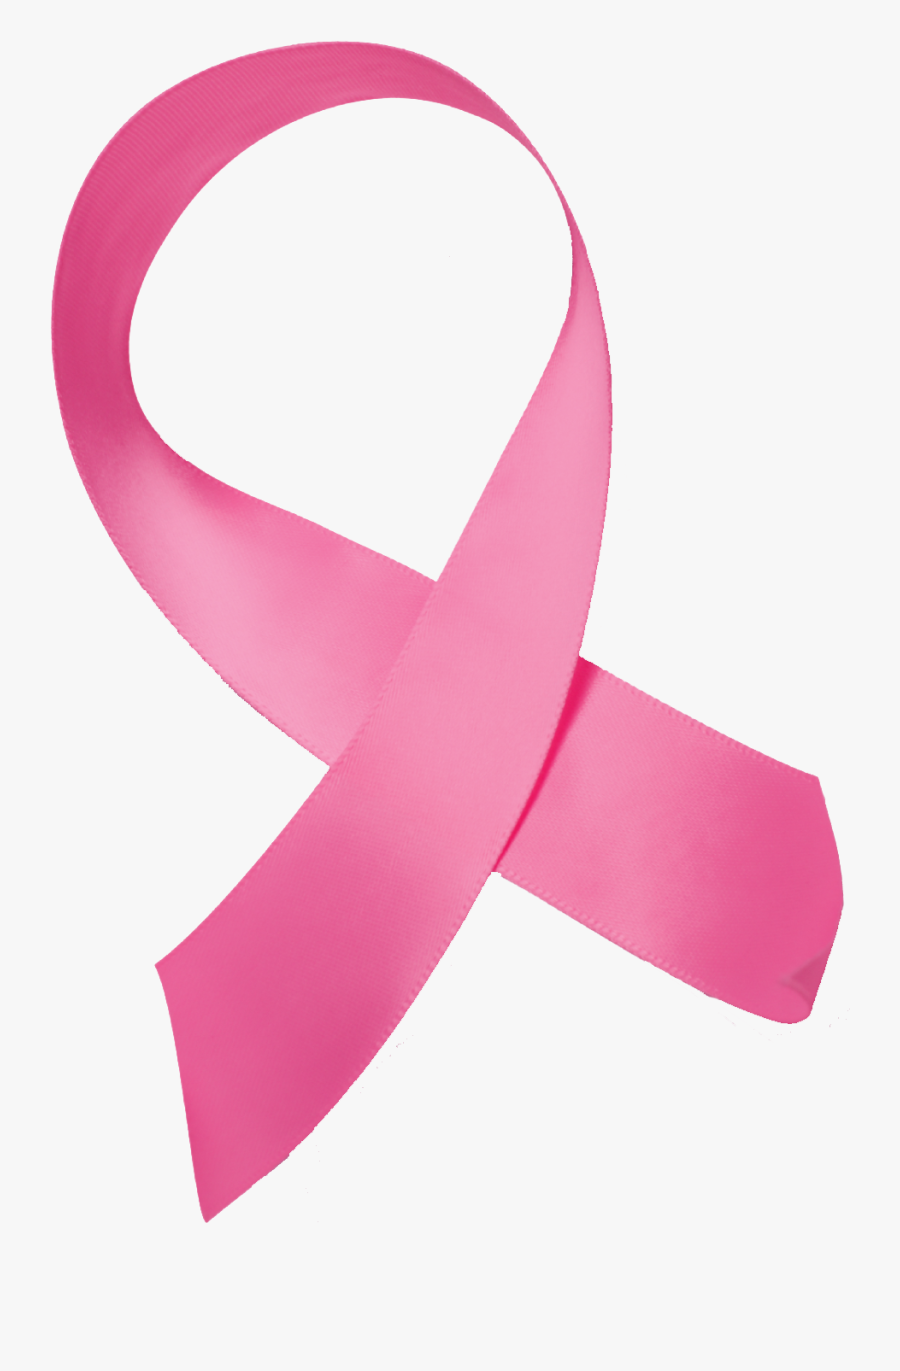 Transparent Breast Cancer Ribbon Png Free, Transparent Clipart